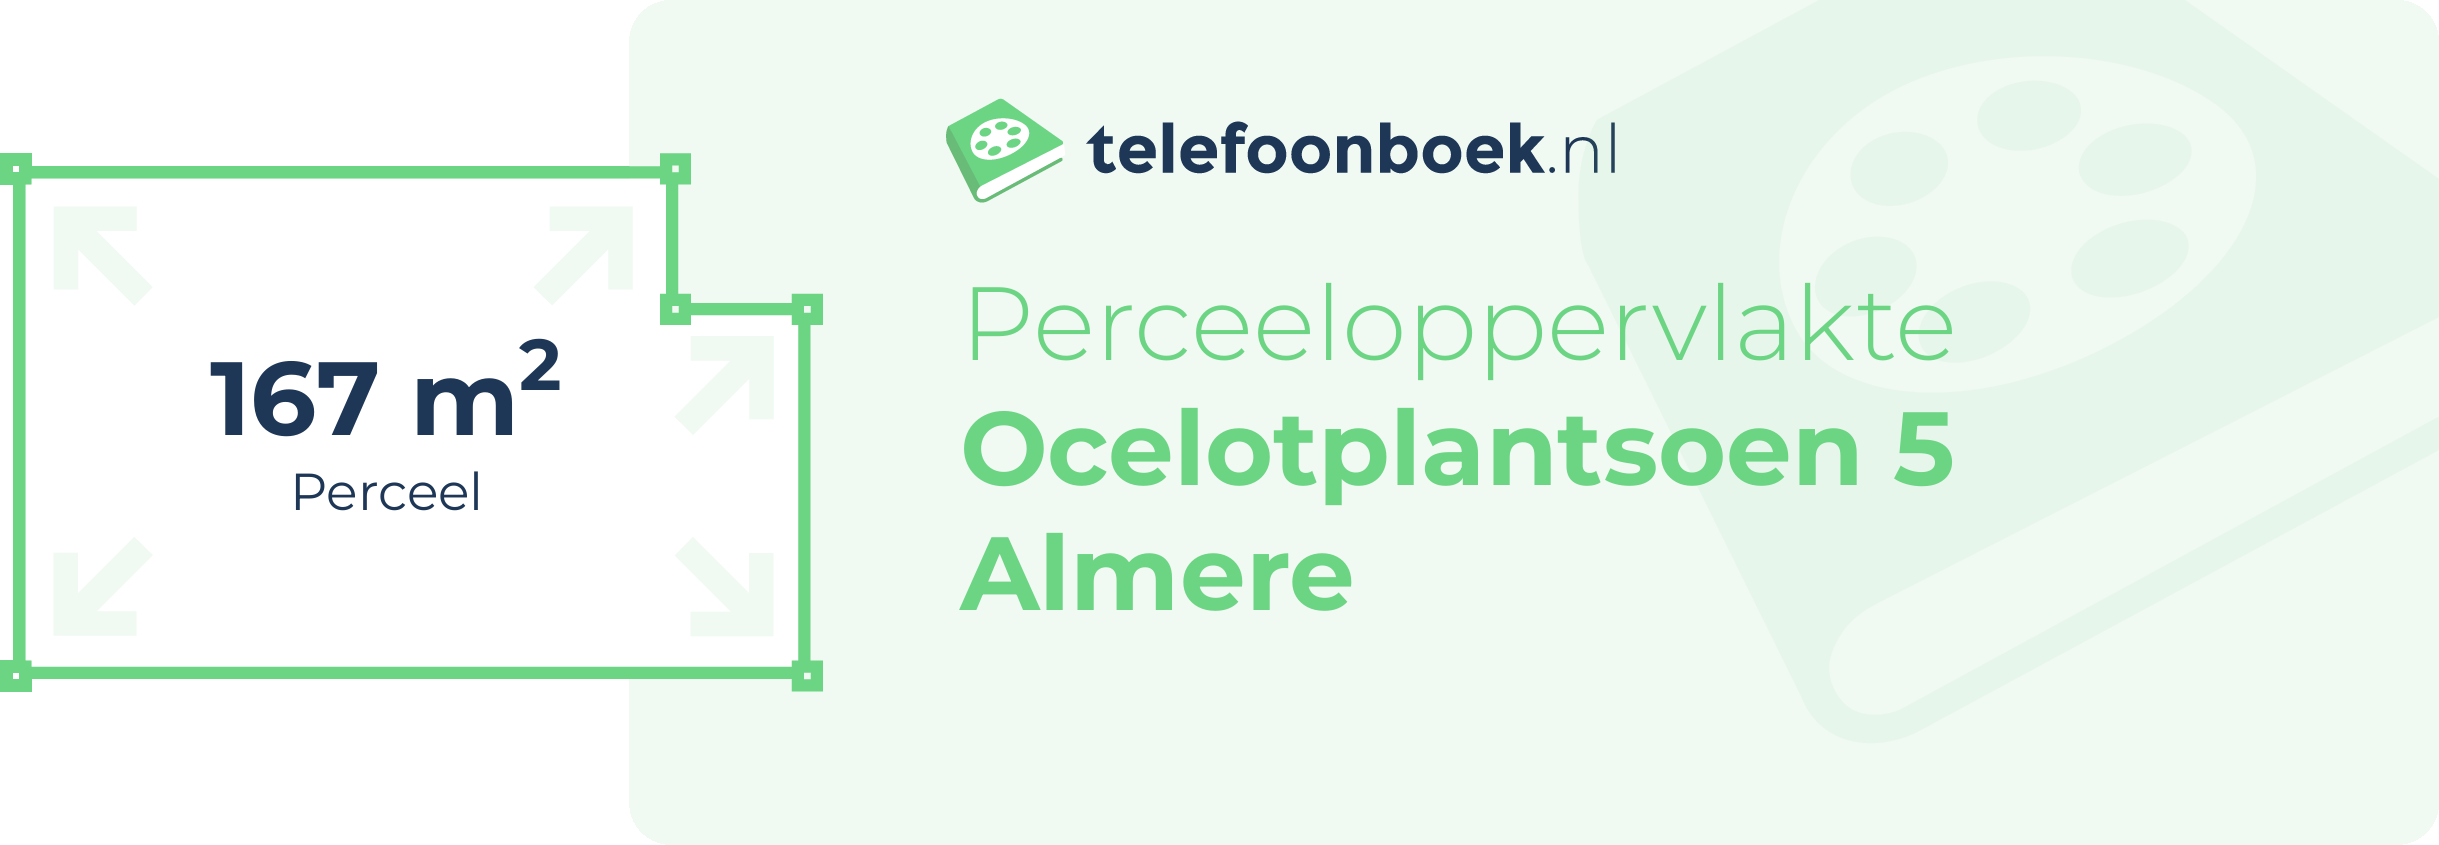 Perceeloppervlakte Ocelotplantsoen 5 Almere